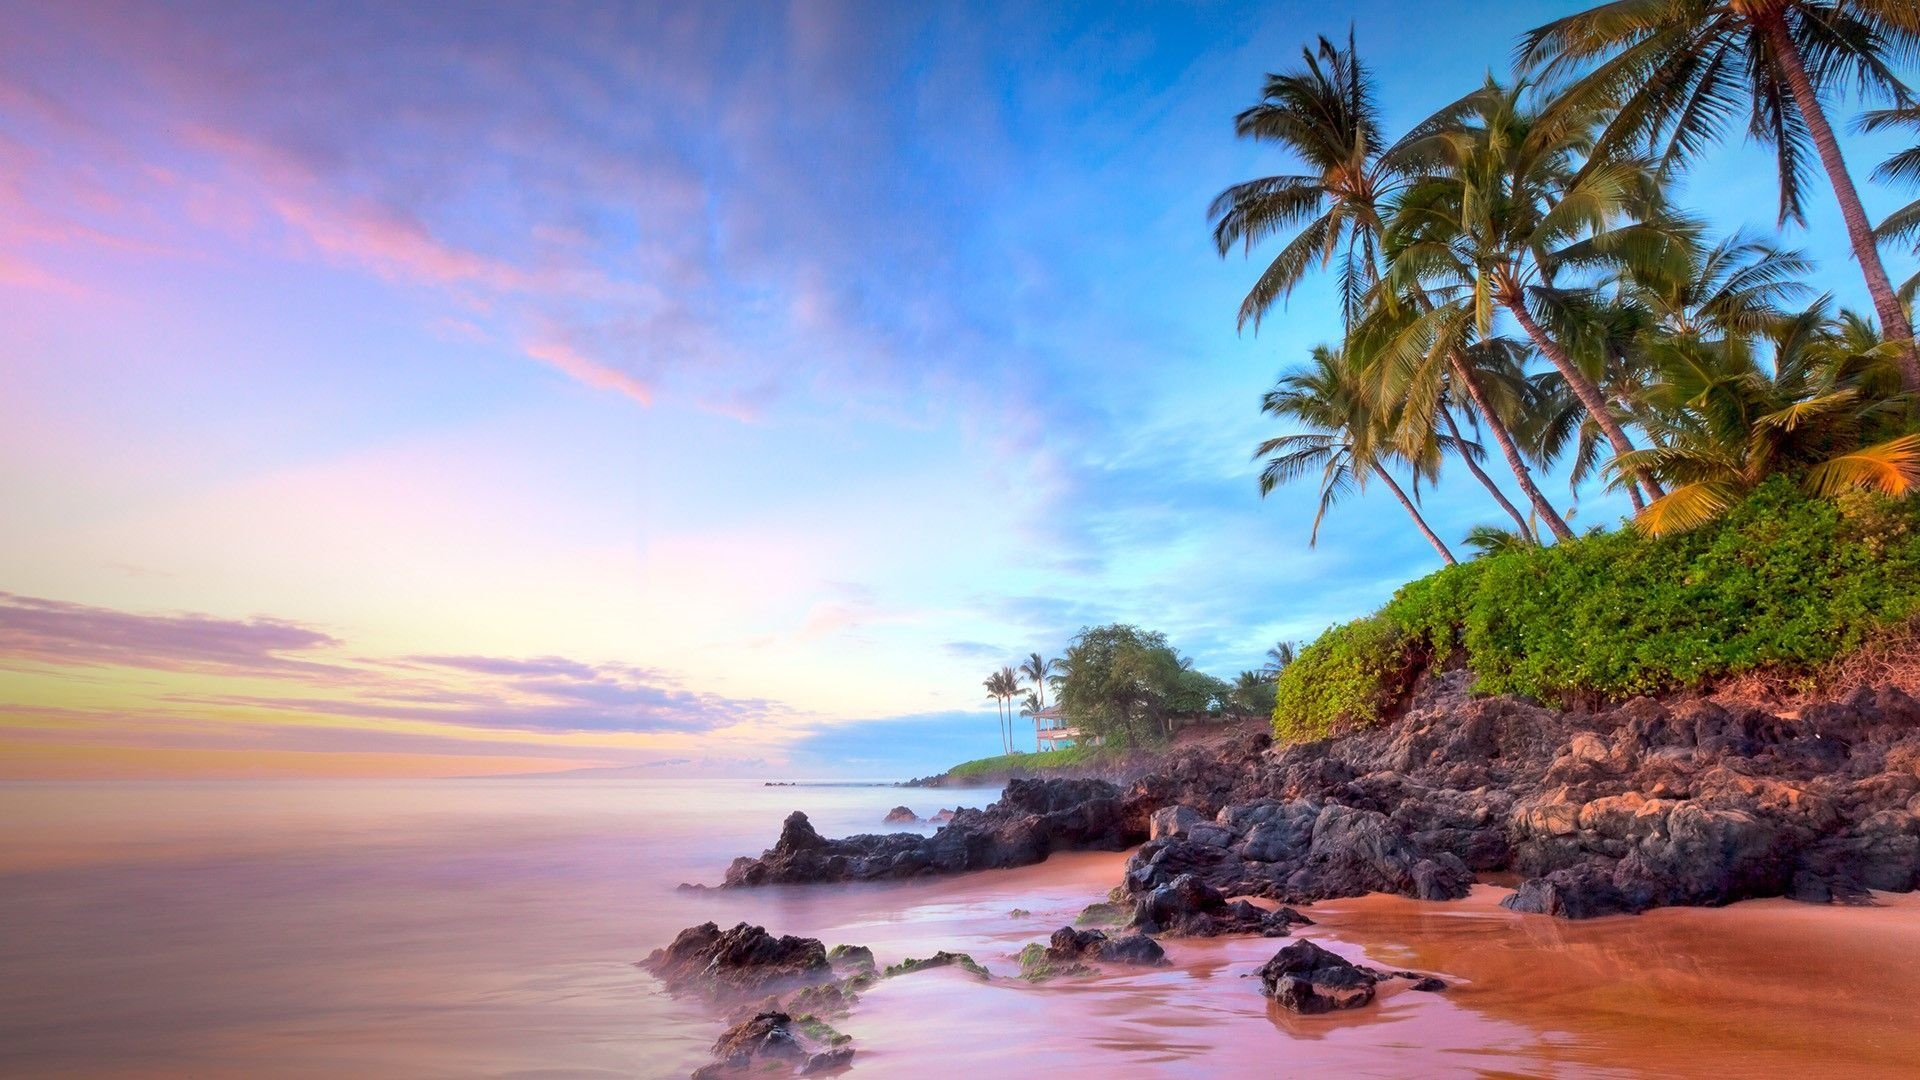 Maui's allure, Paradise found, Sun-soaked wonder, Tropical escapes, 1920x1080 Full HD Desktop